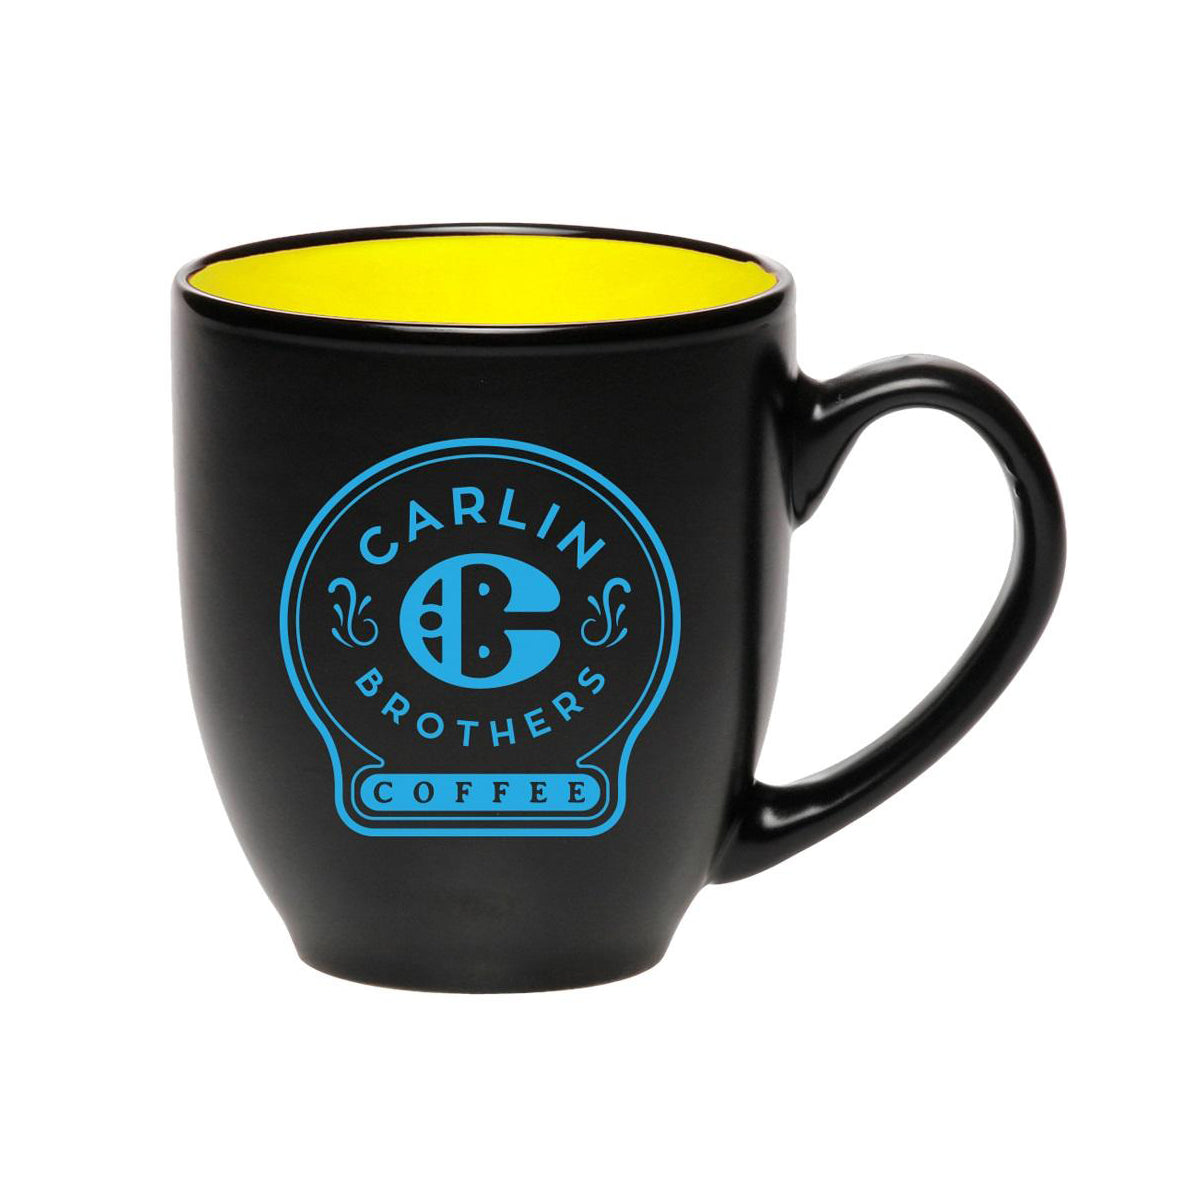 16 ounce black mug with blue Carlin Brothers Coffee logo. Mug interior is yellow.